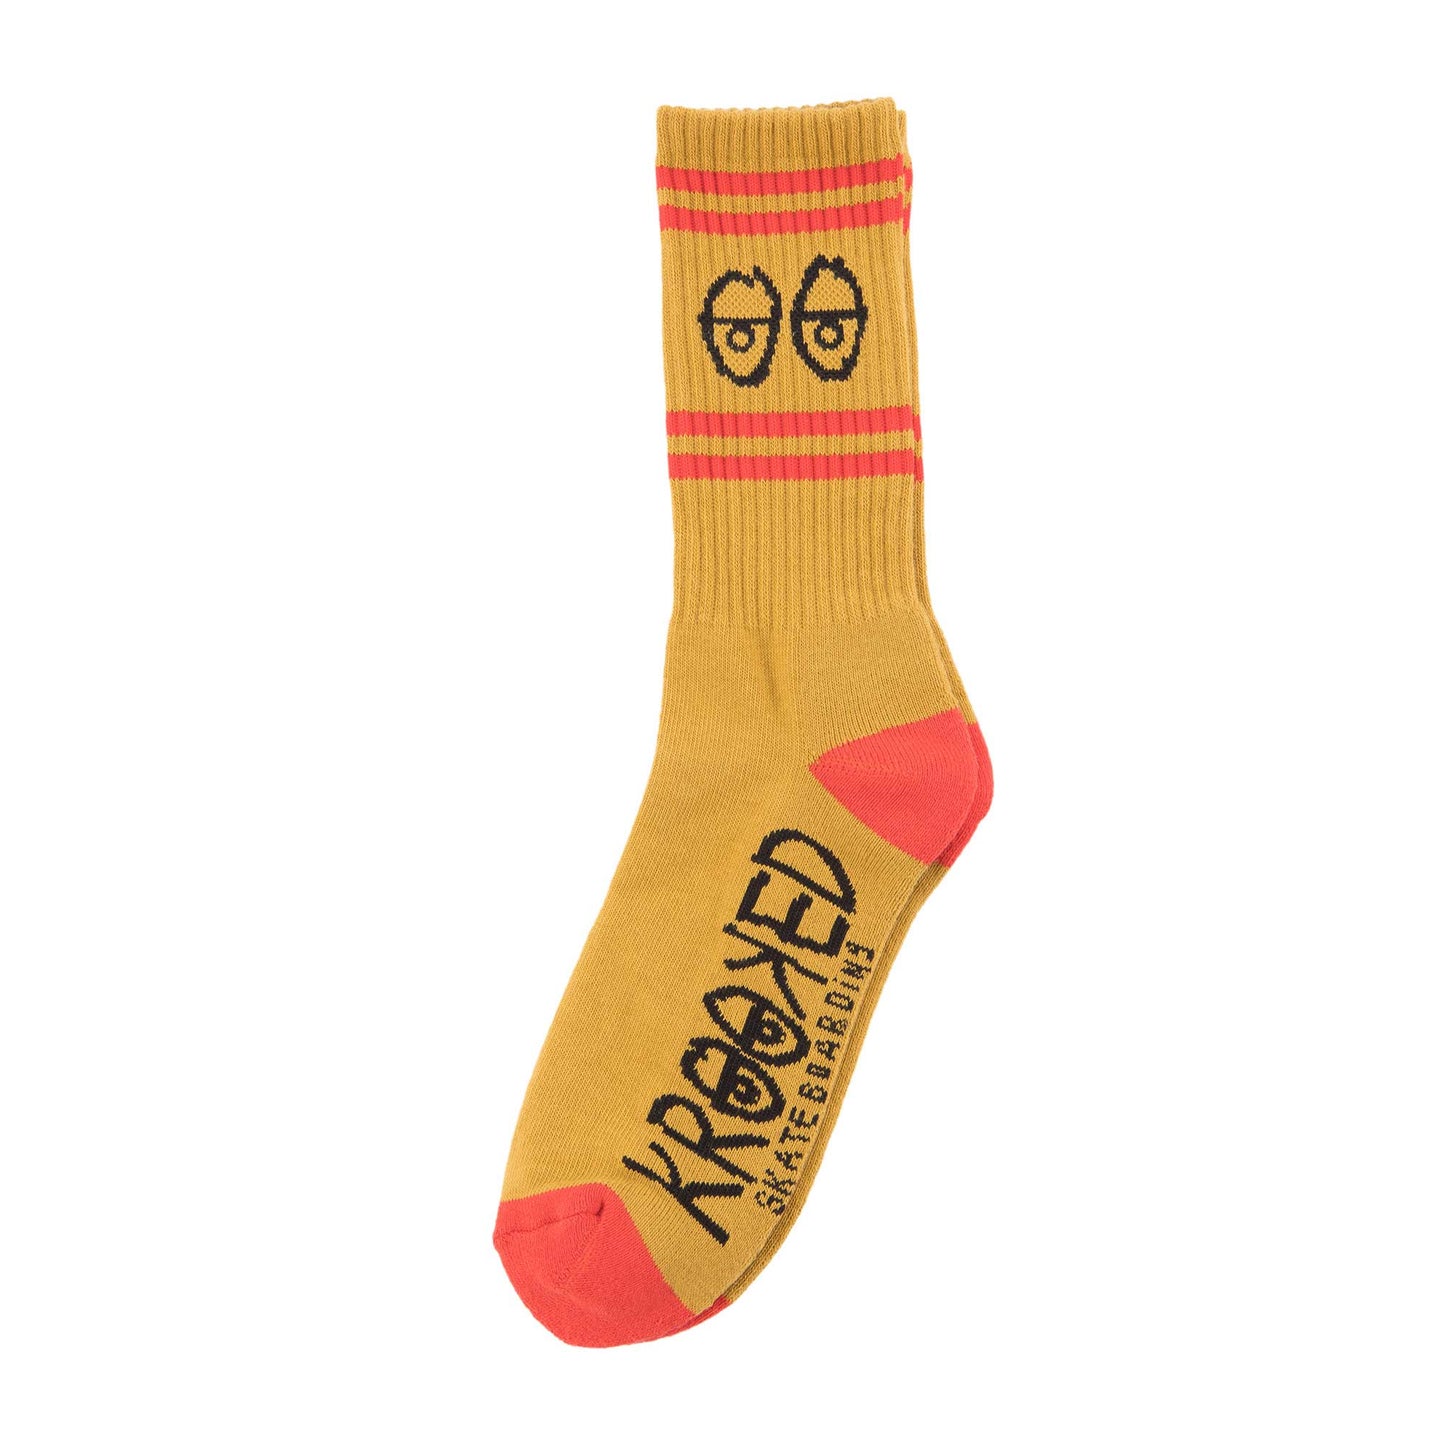 Krooked Eyes Sock, gold/red/black - Tiki Room Skateboards - 1